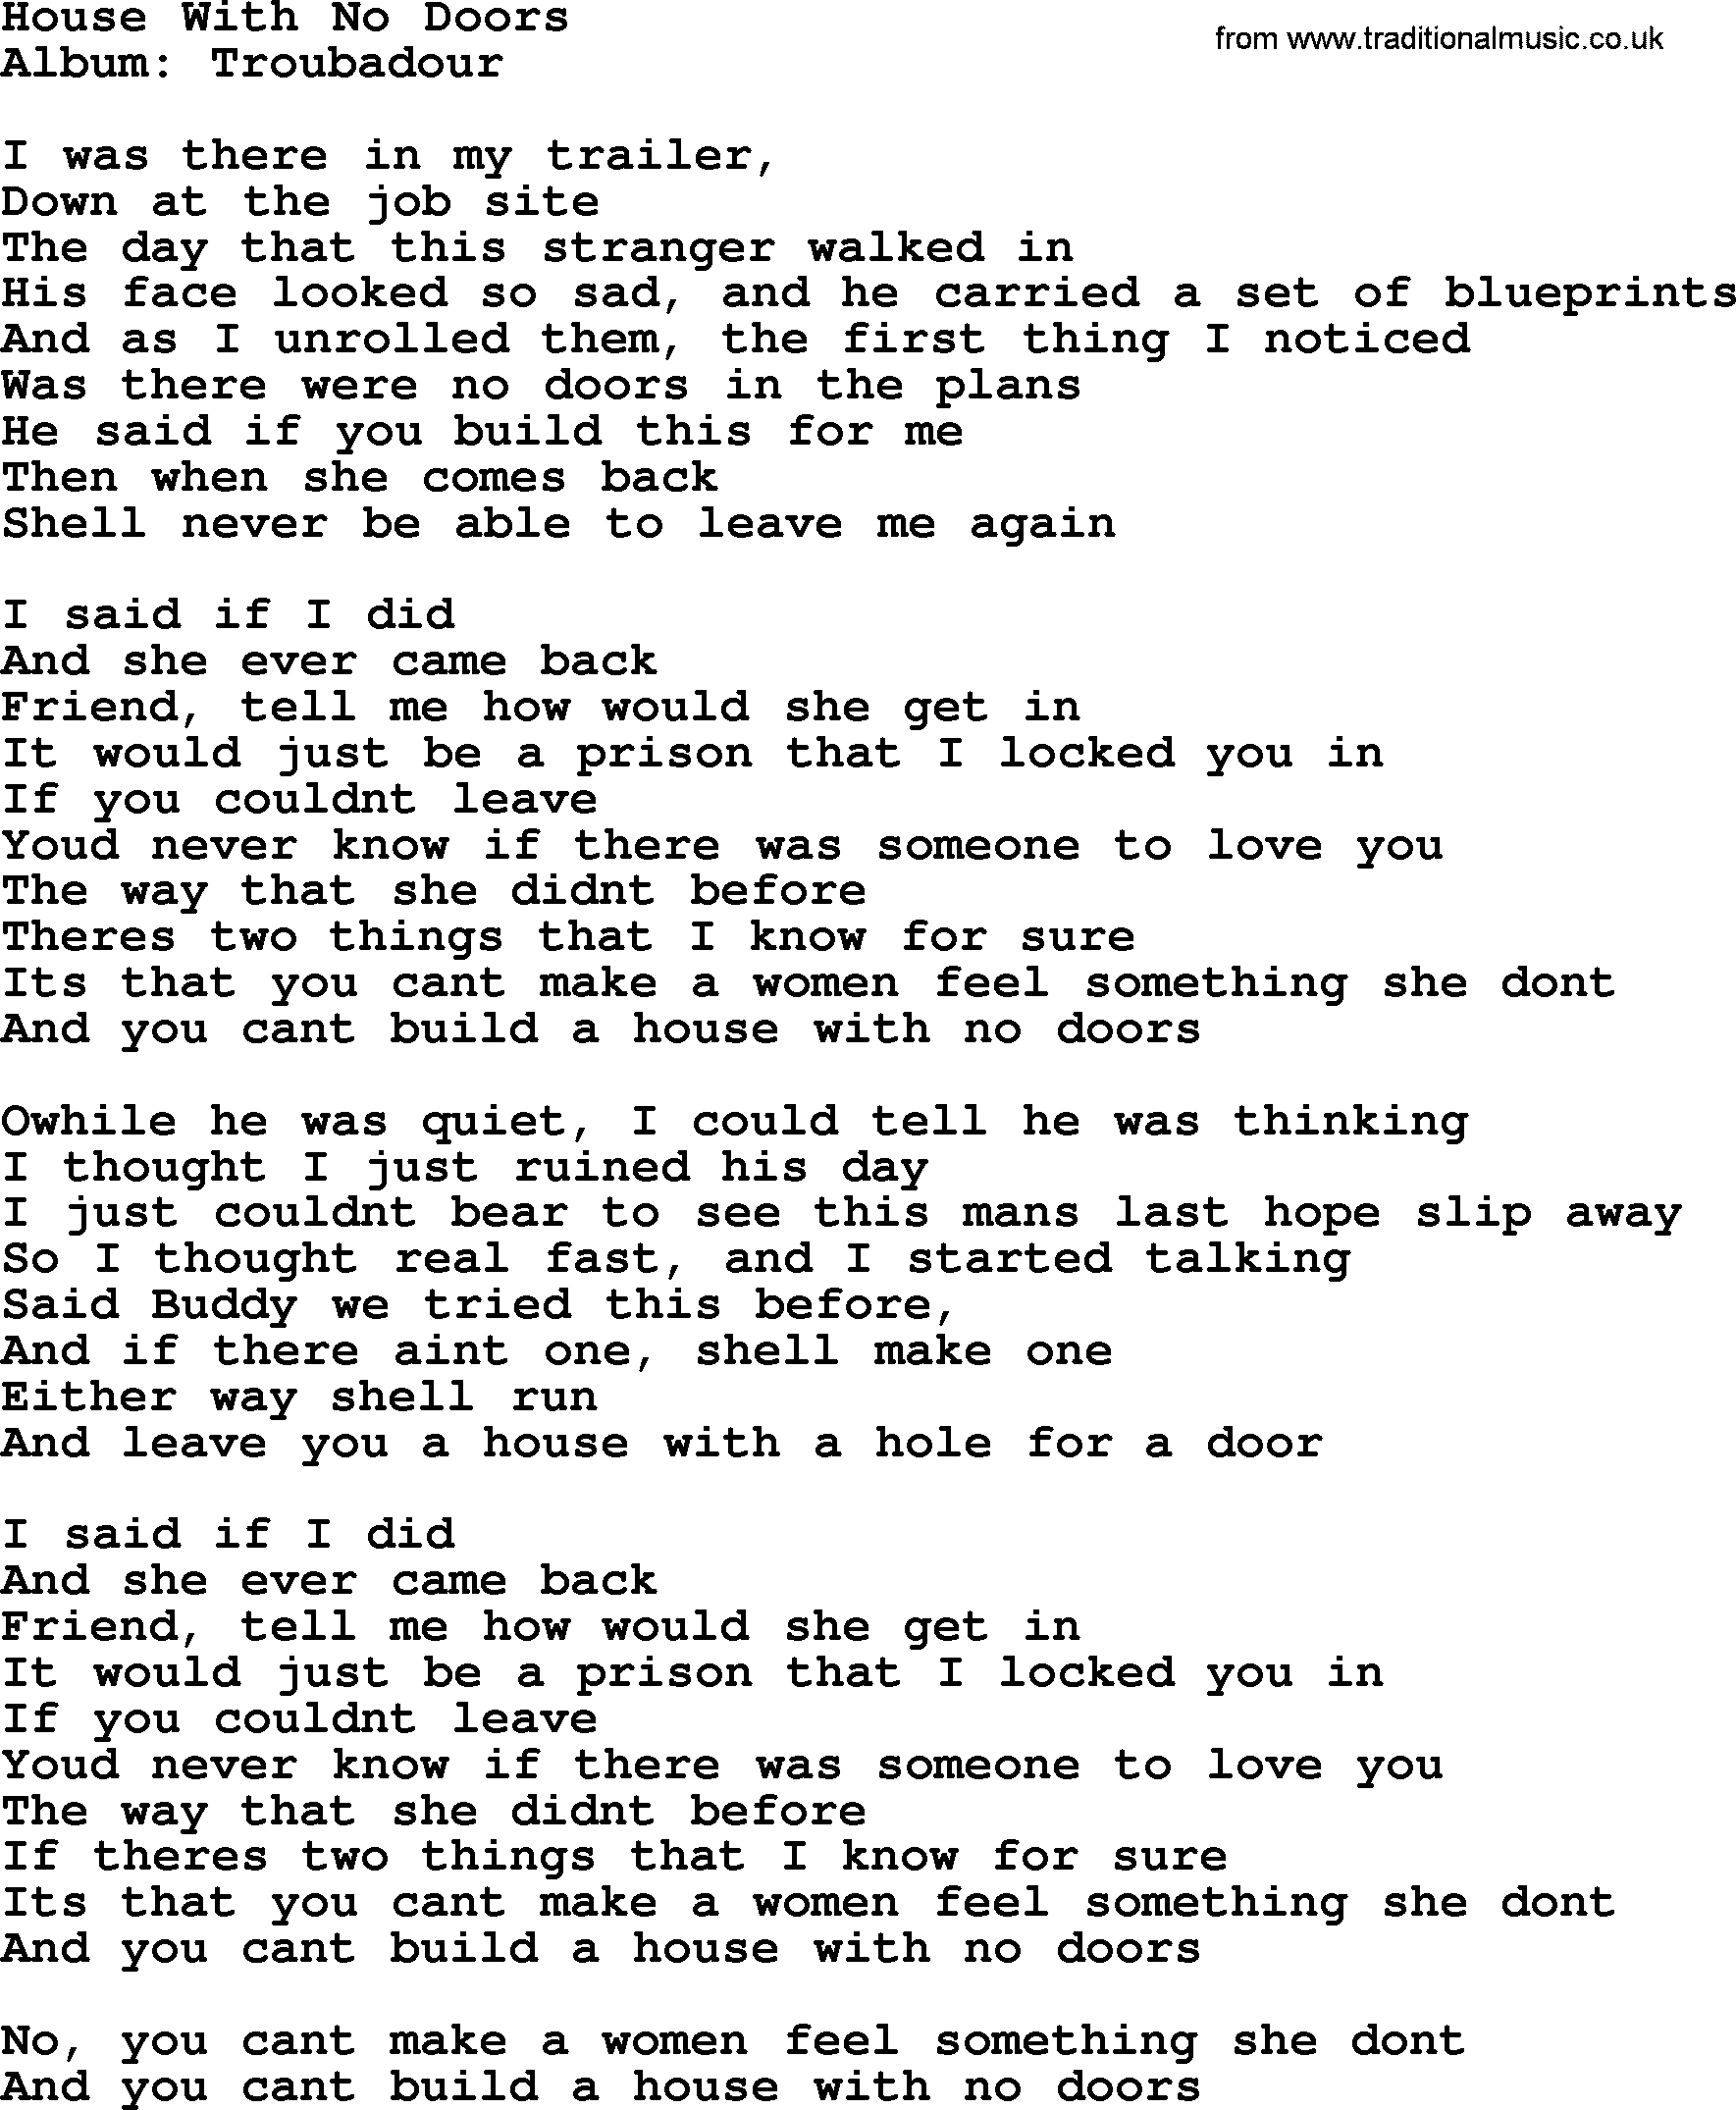 George Strait song: House With No Doors, lyrics